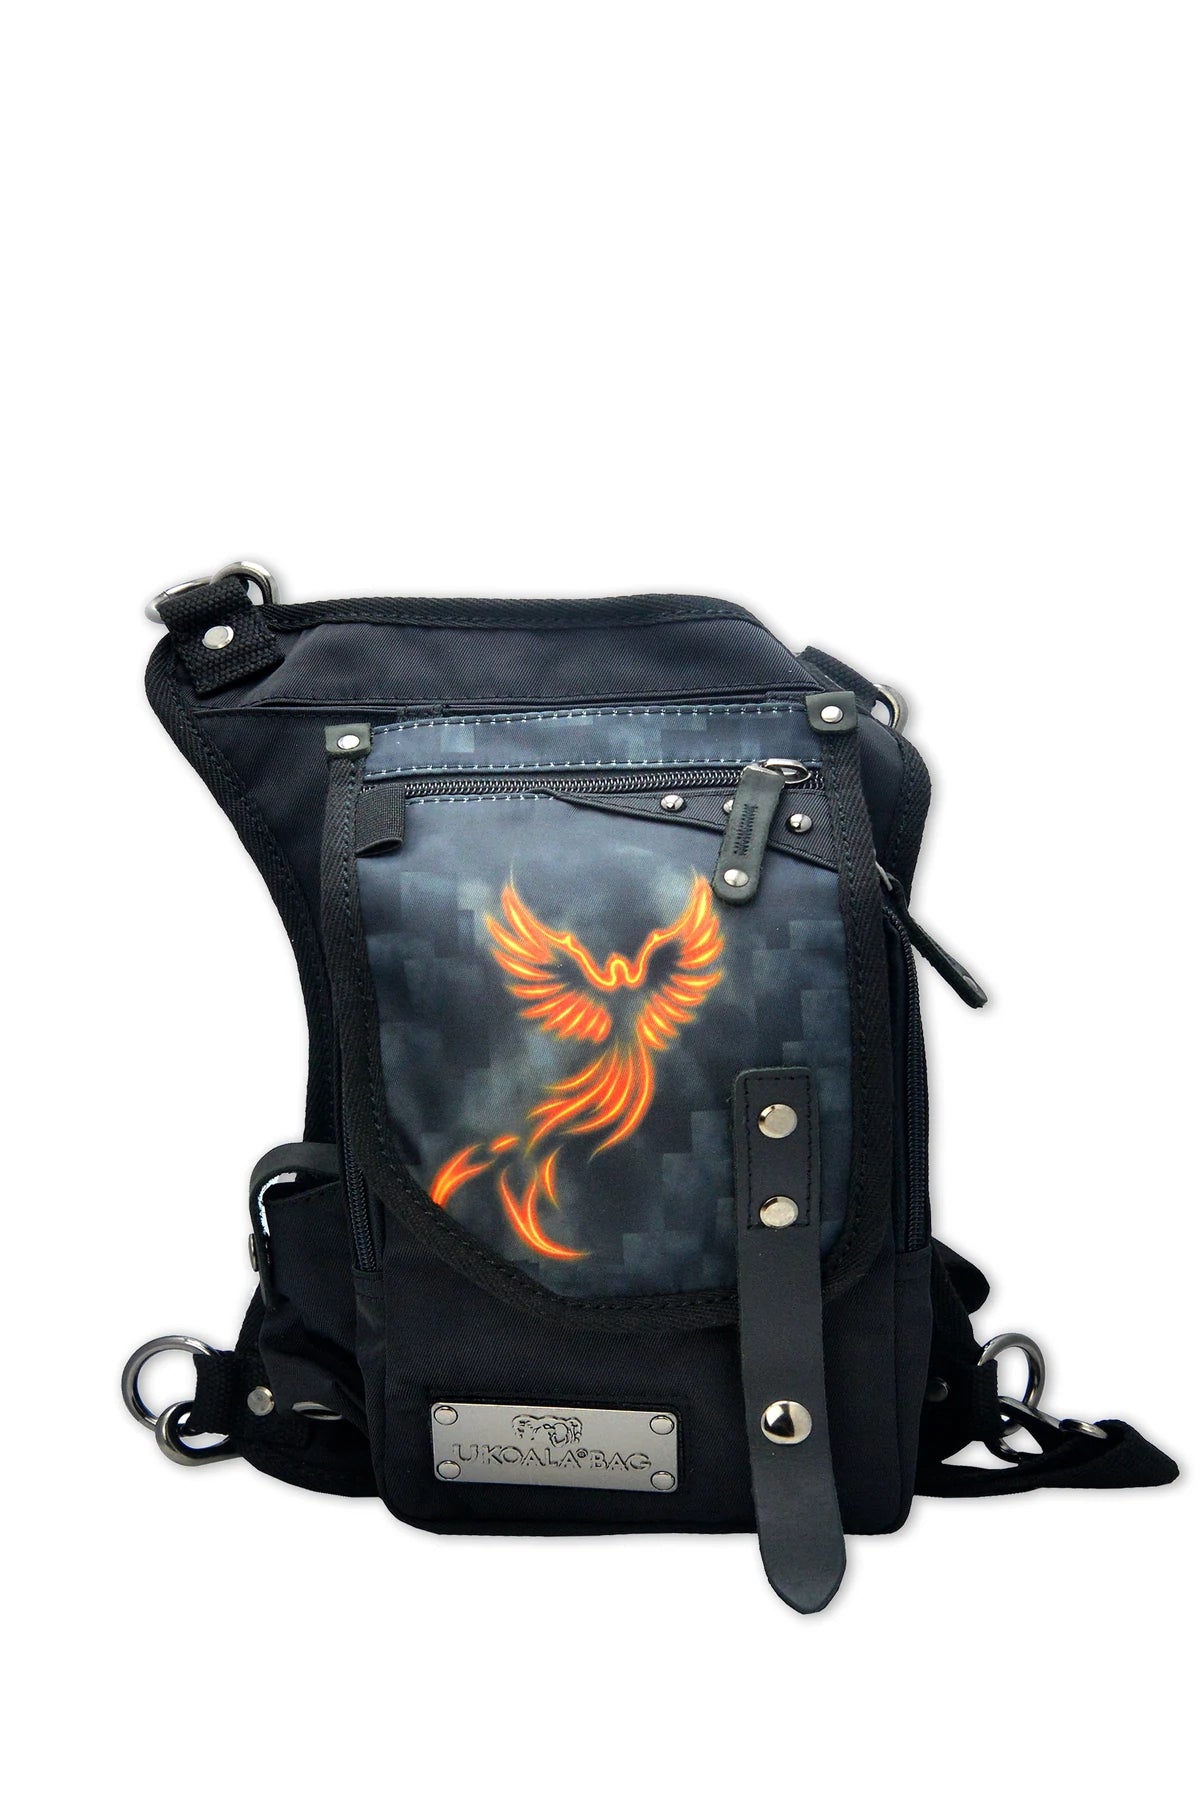 NEW Zombie UUB Gear Hip bag, Crossbody. Backpack - Hiding Hilda, LLC